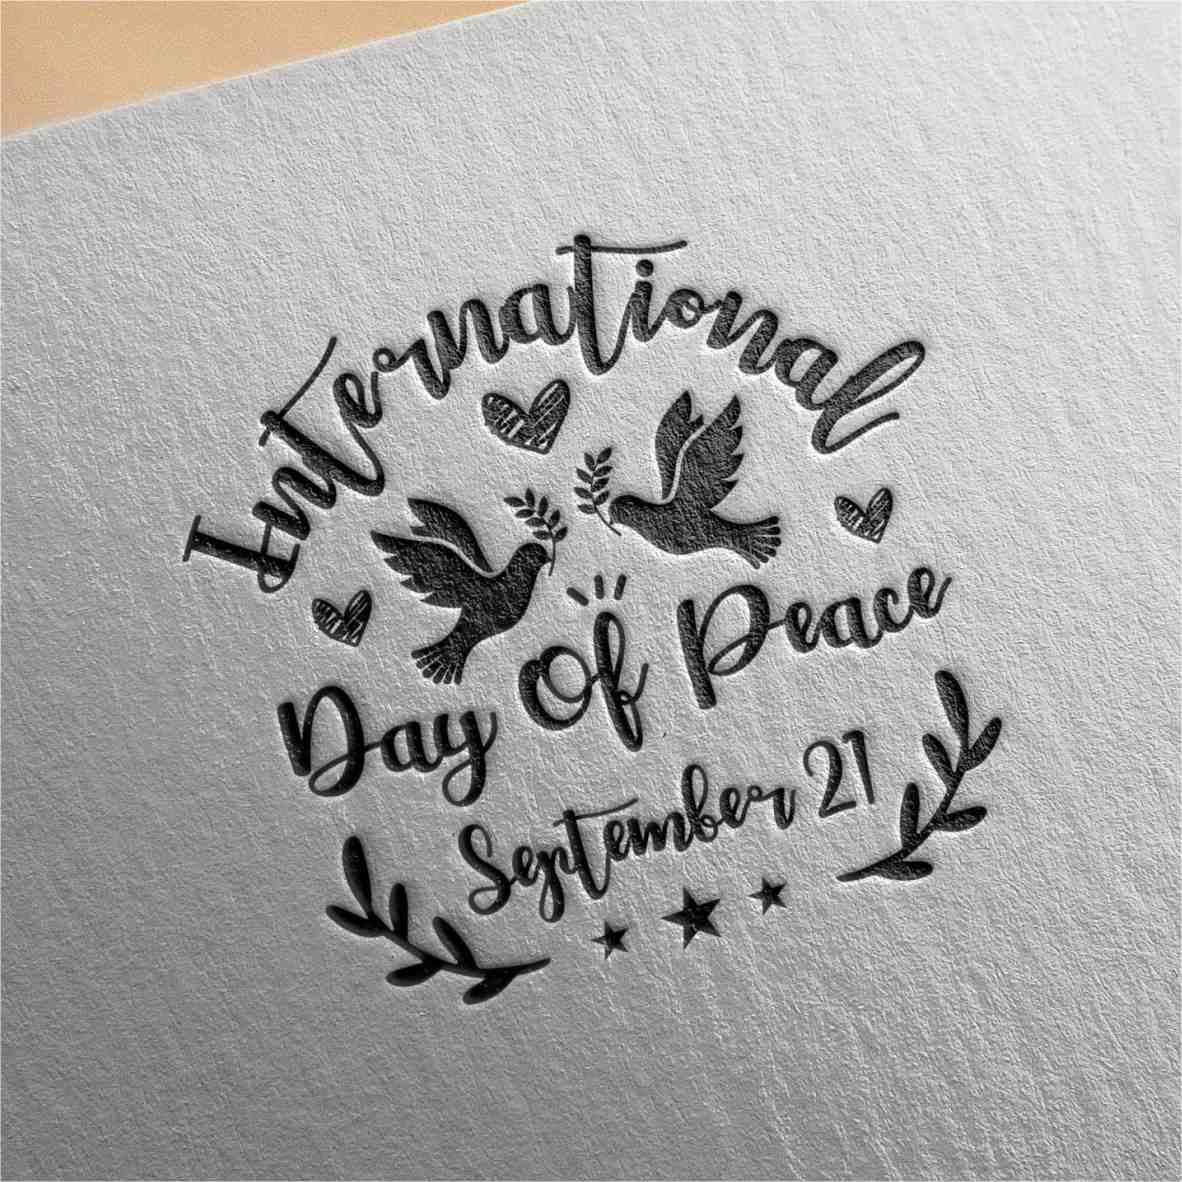 international day peace design logo 7 996